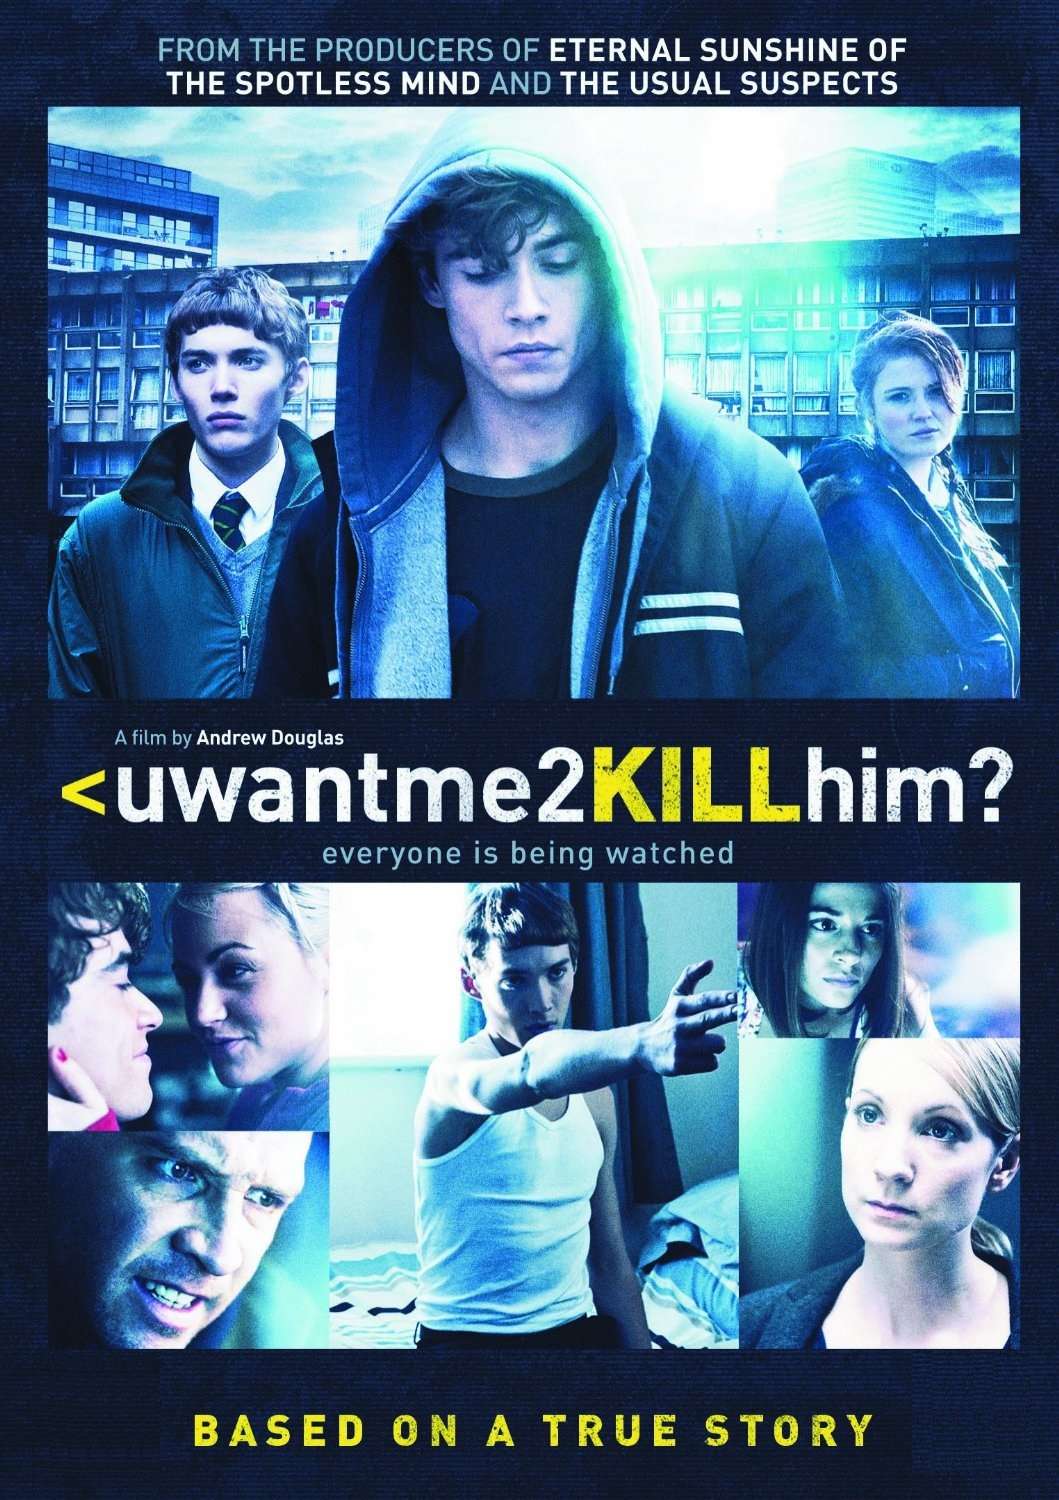 U Want Me 2 Kill Him - 2013 DVDRip x264 - Türkçe Altyazılı Tek Link indir